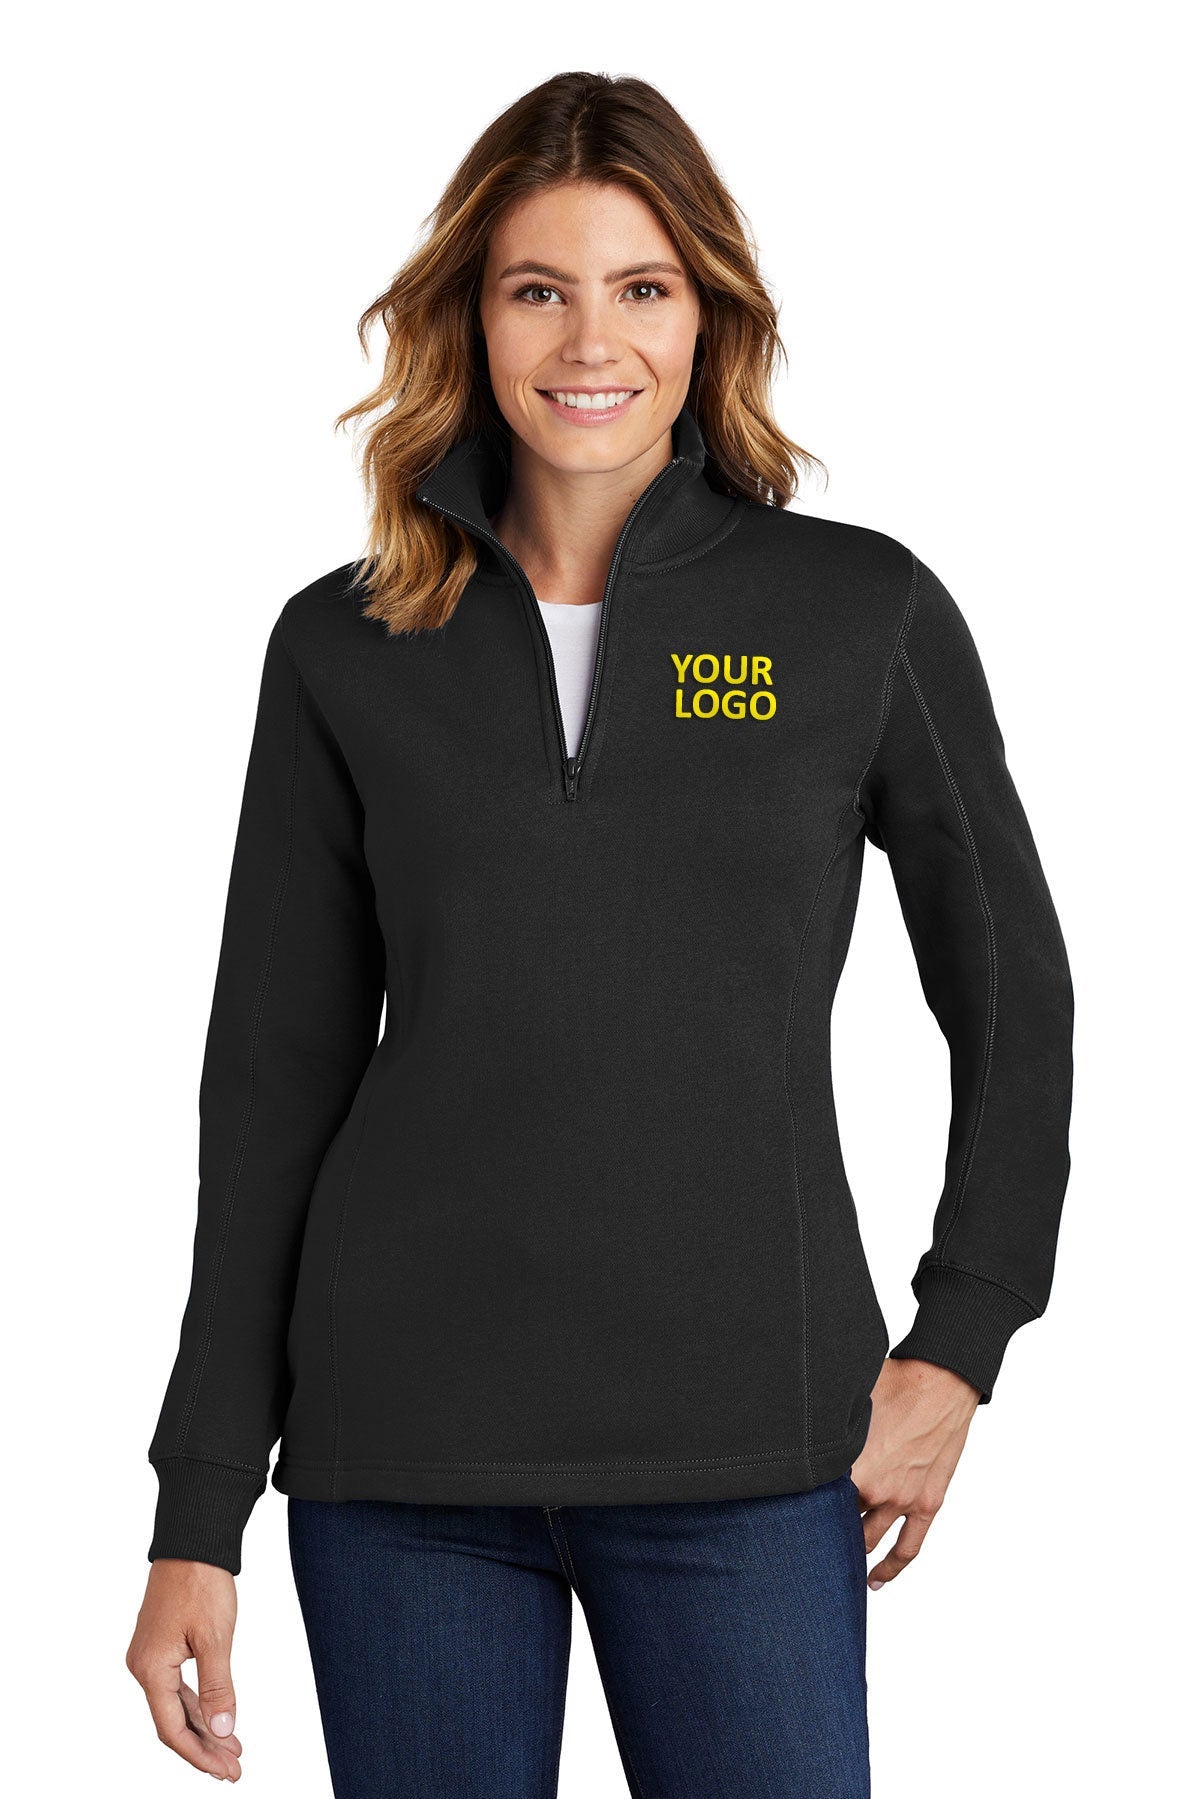 Sport-Tek Ladies Customized 1/4-Zip Sweatshirts, Black